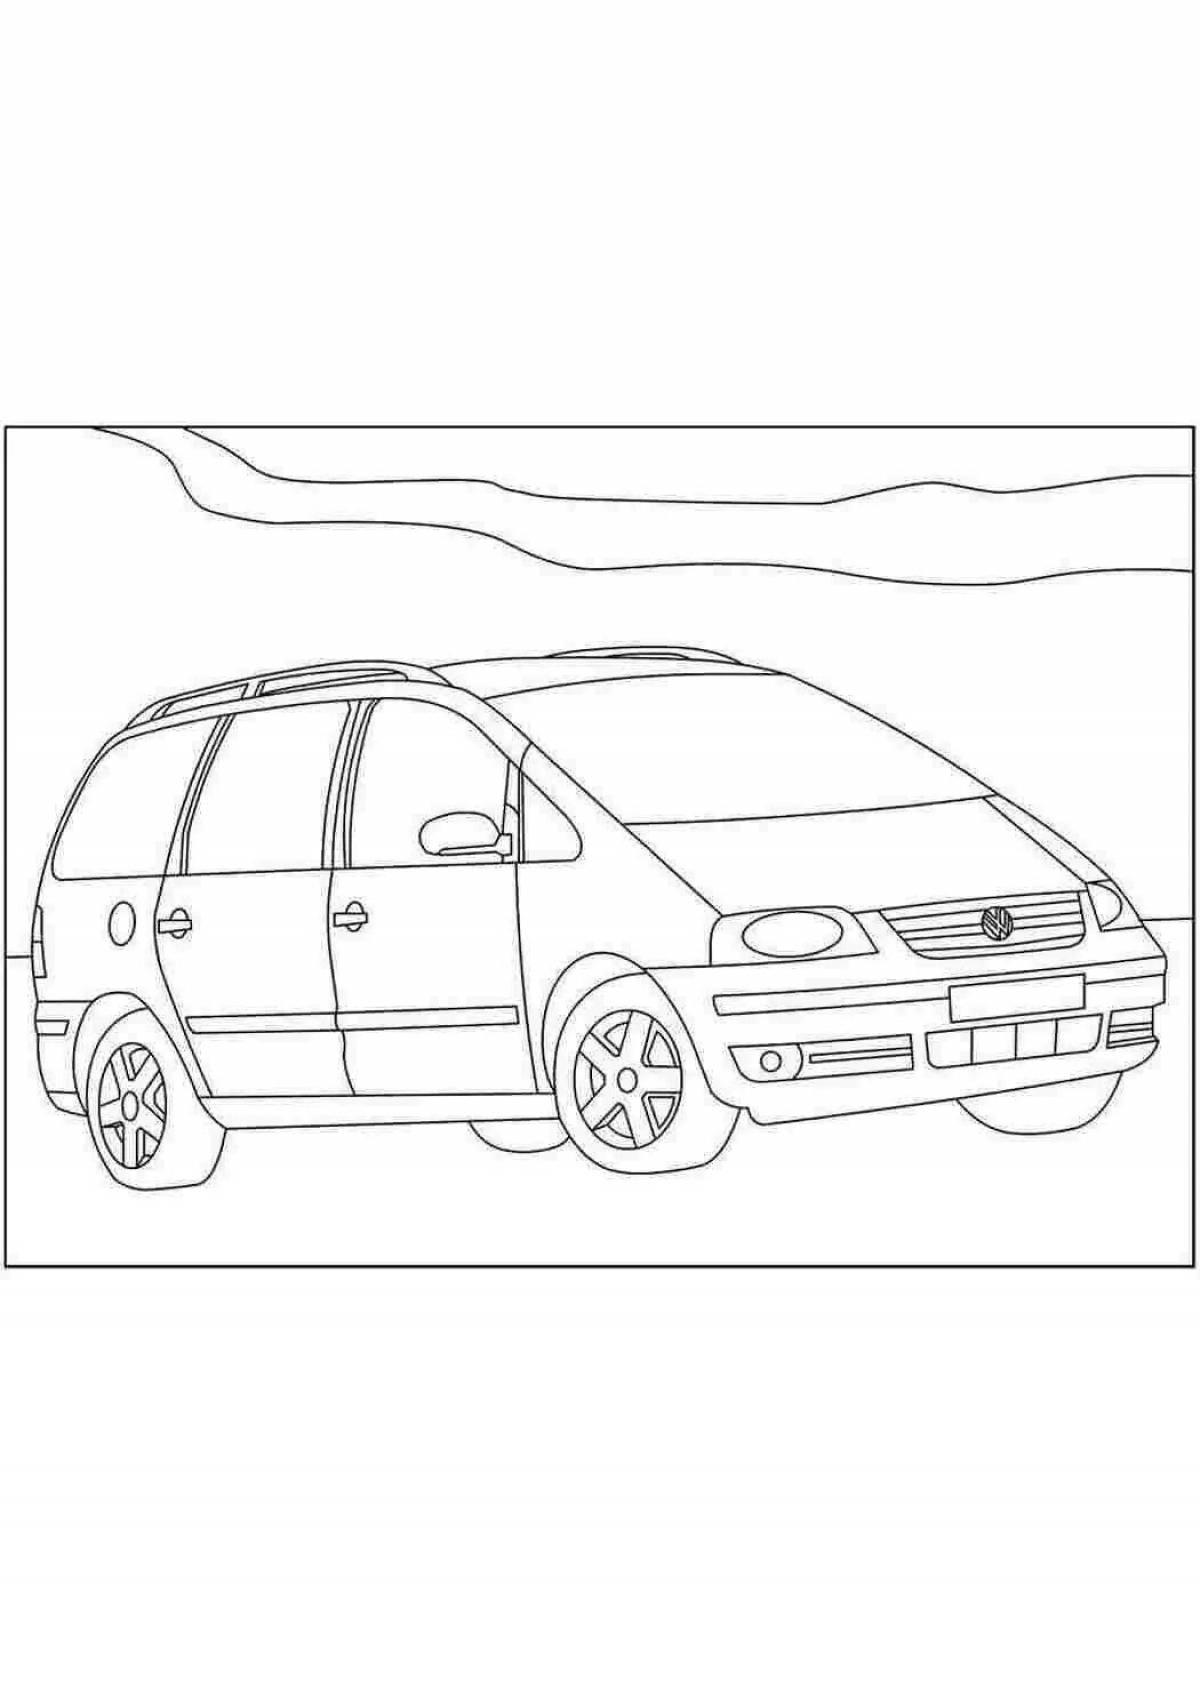 Fancy Volkswagen coloring page